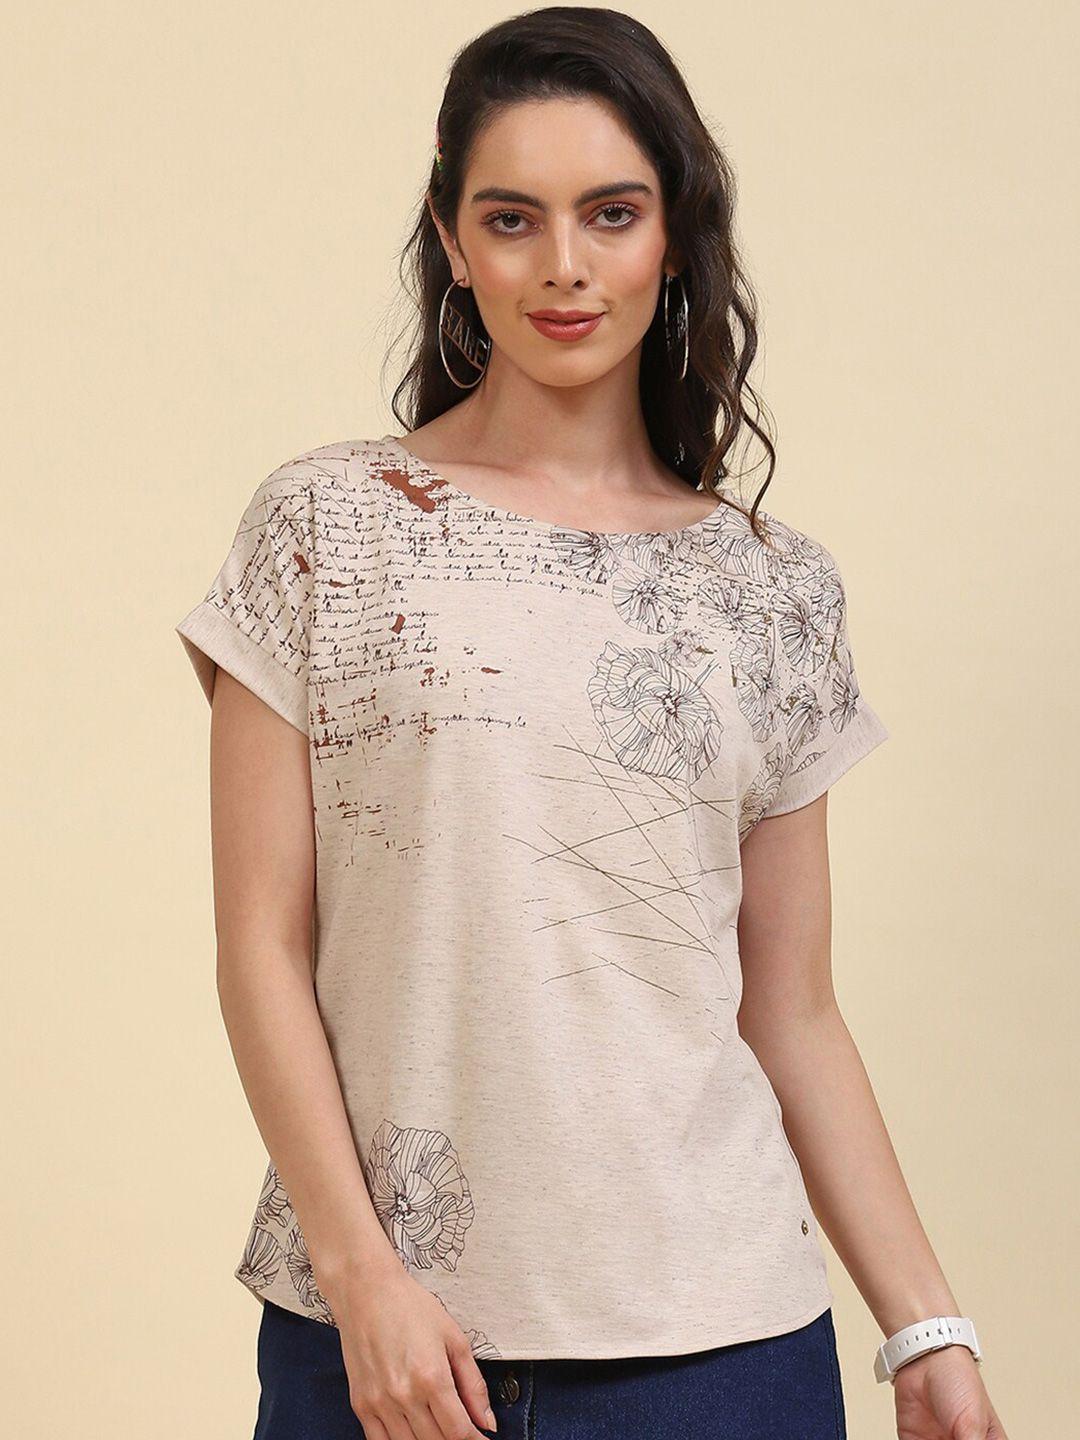 monte-carlo-floral-printed-extended-sleeves-top